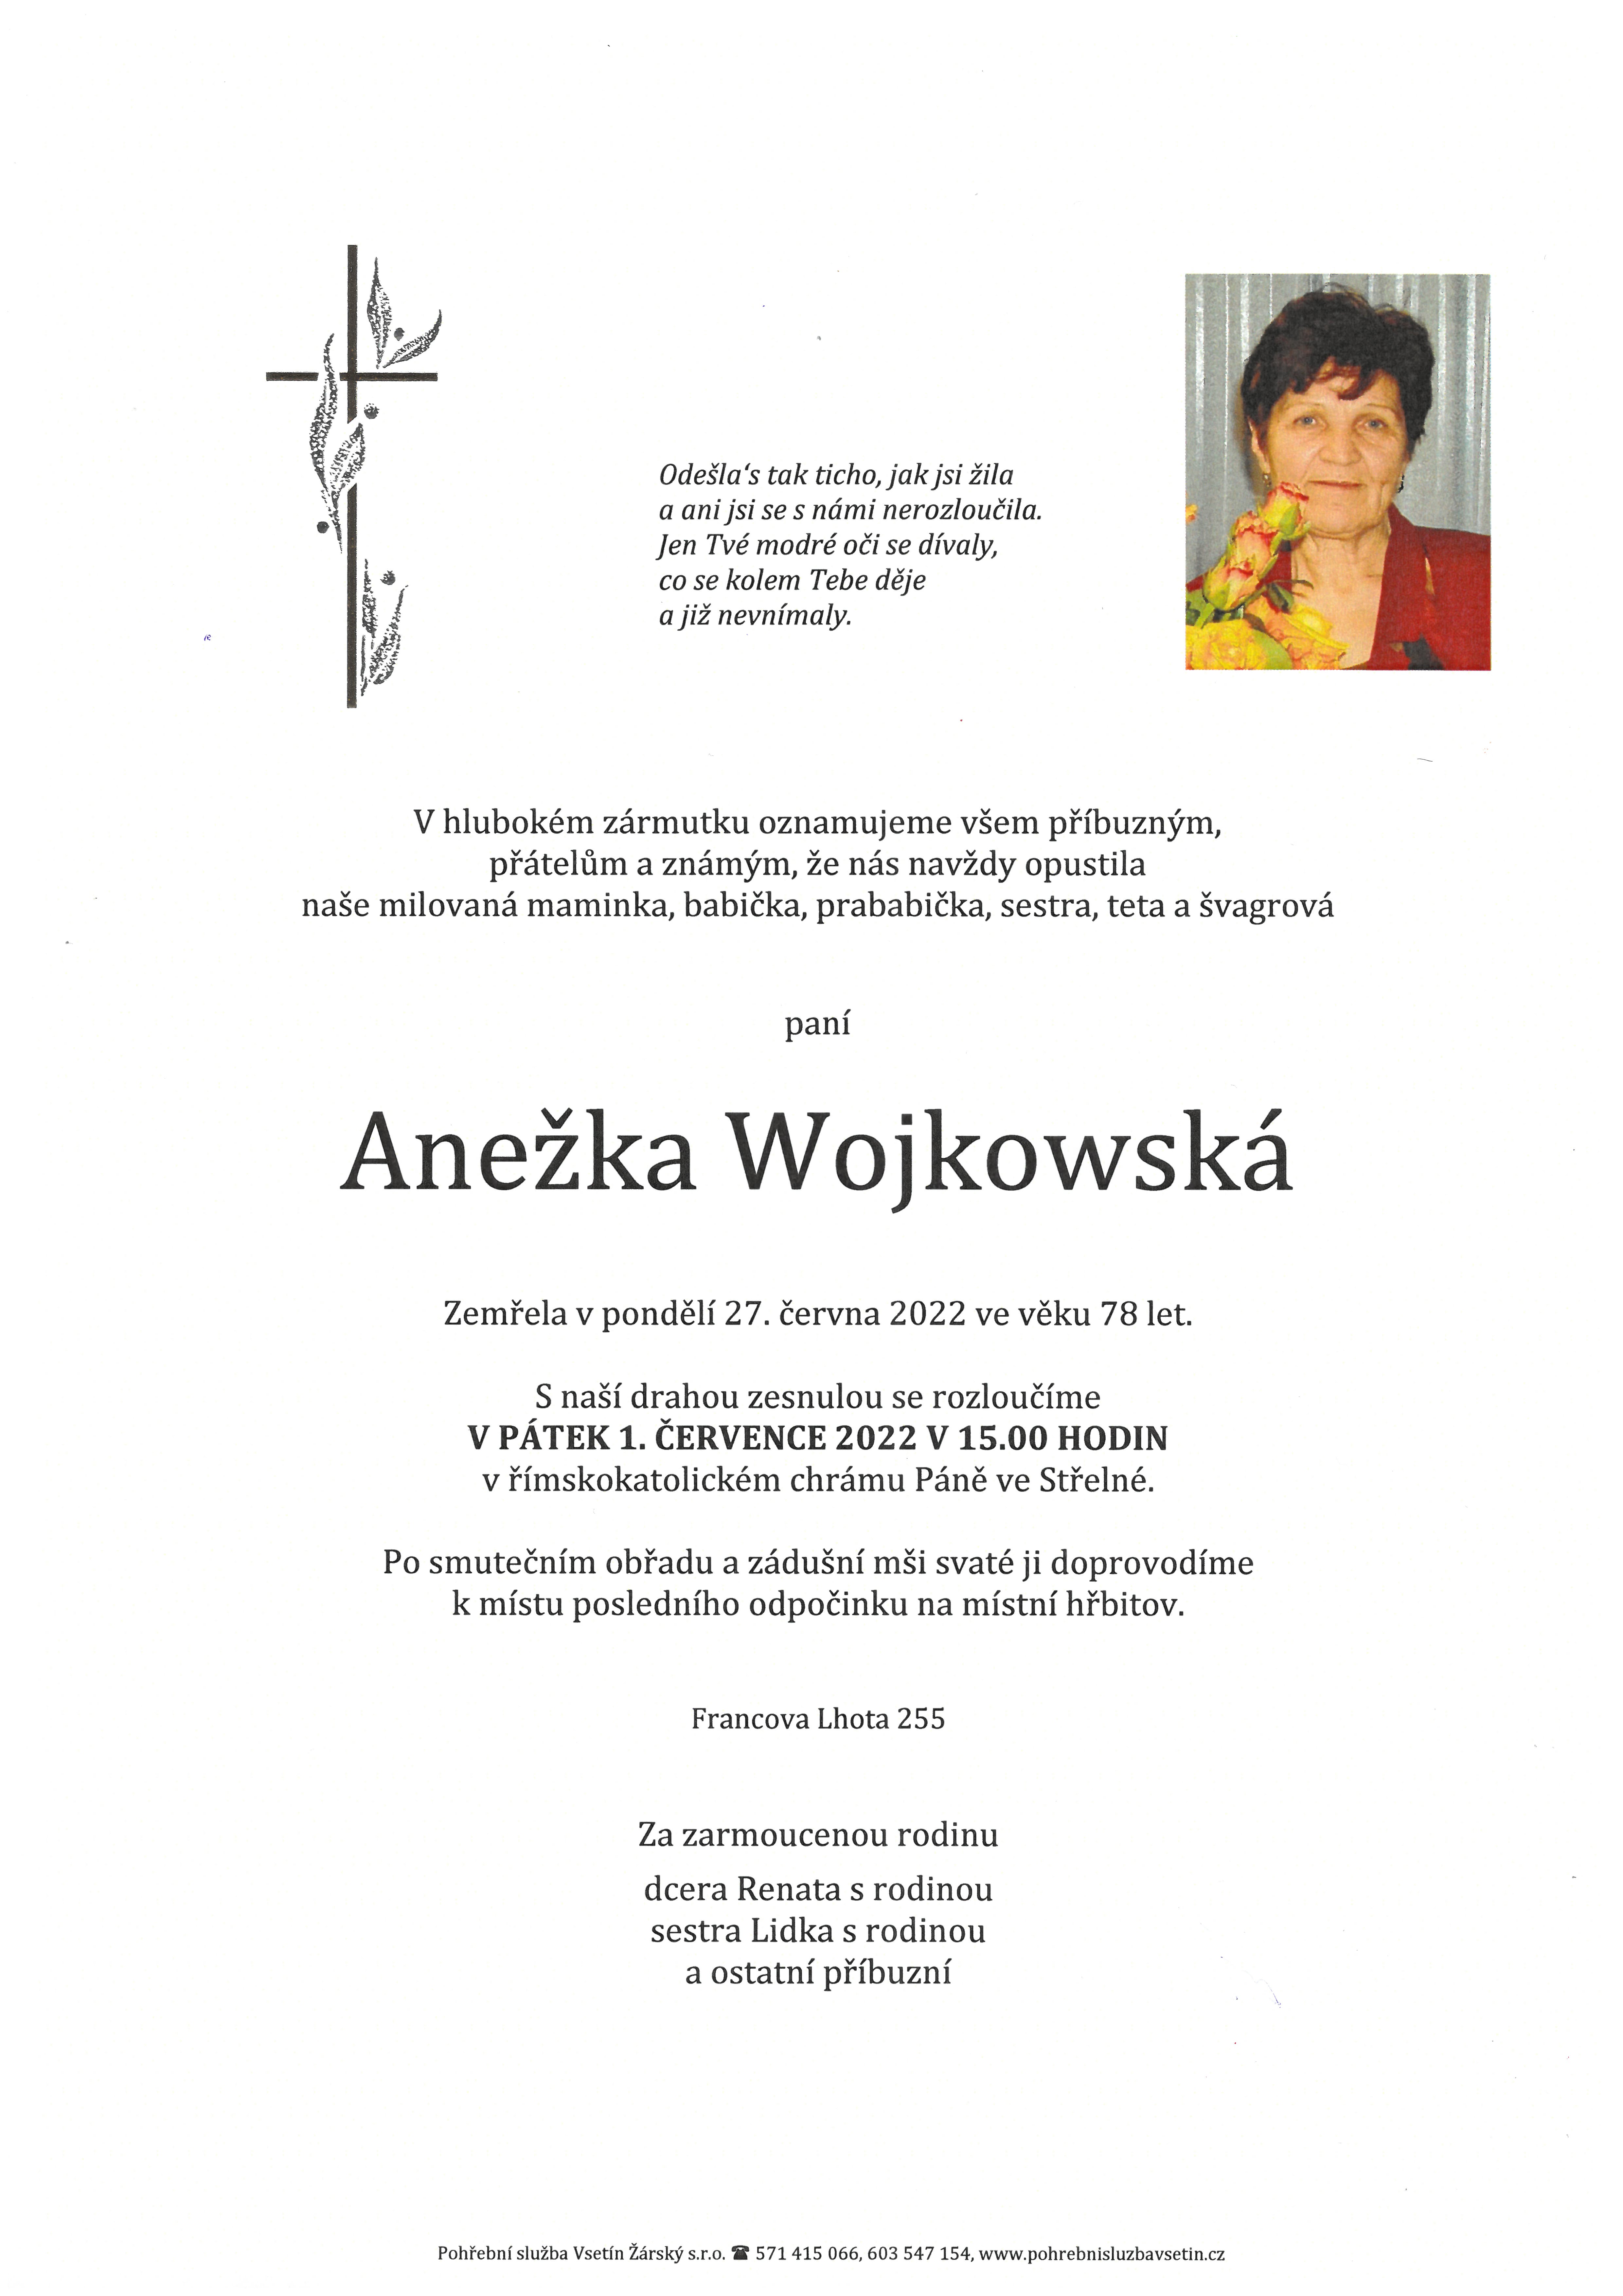 Anežka Wojkowská